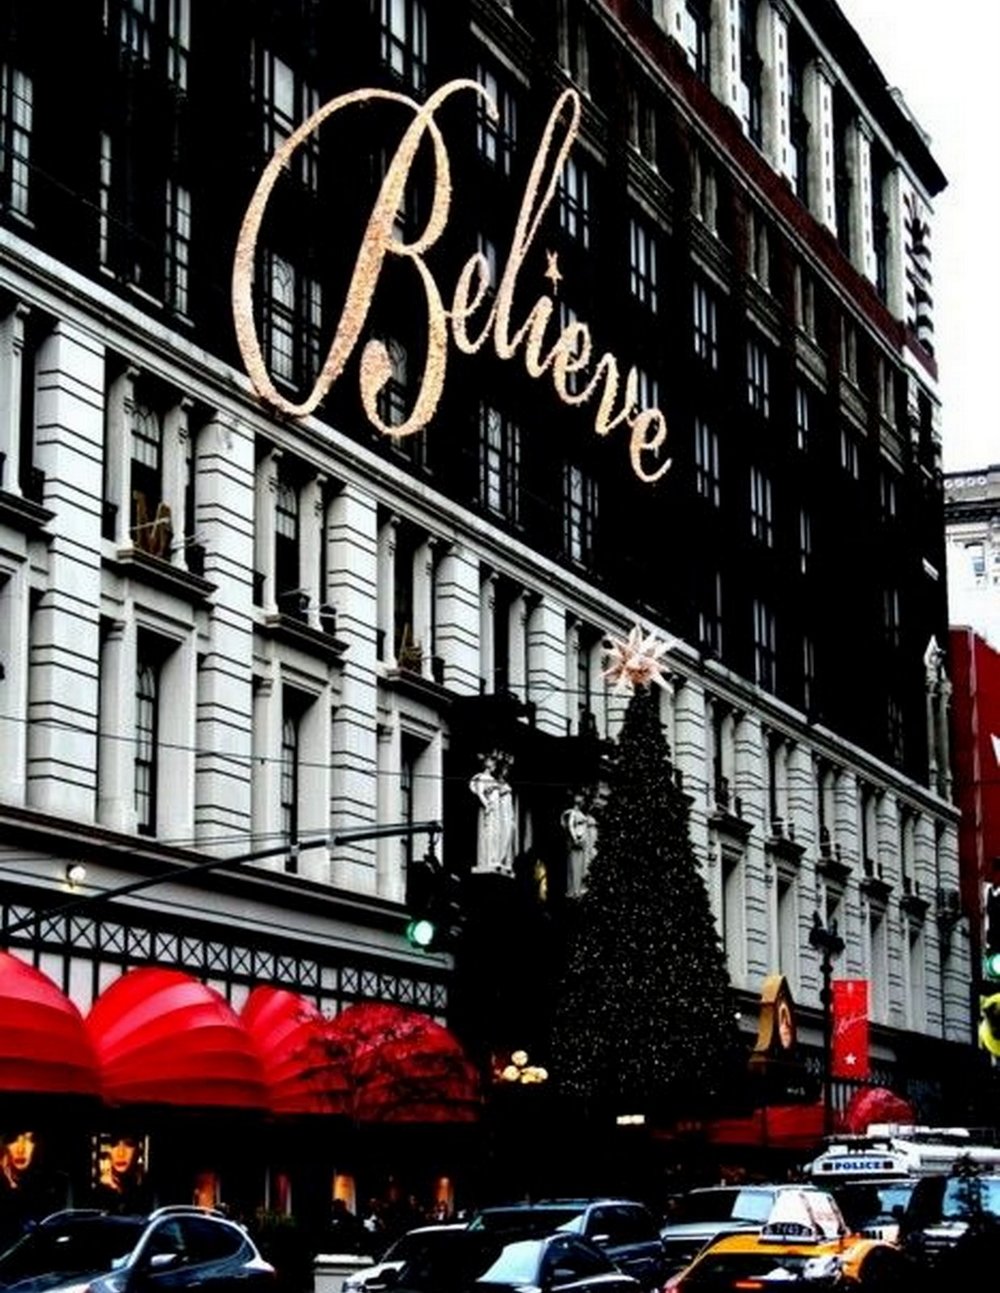 Believe :: Christmas at Macys' in NY :: House of Valentina